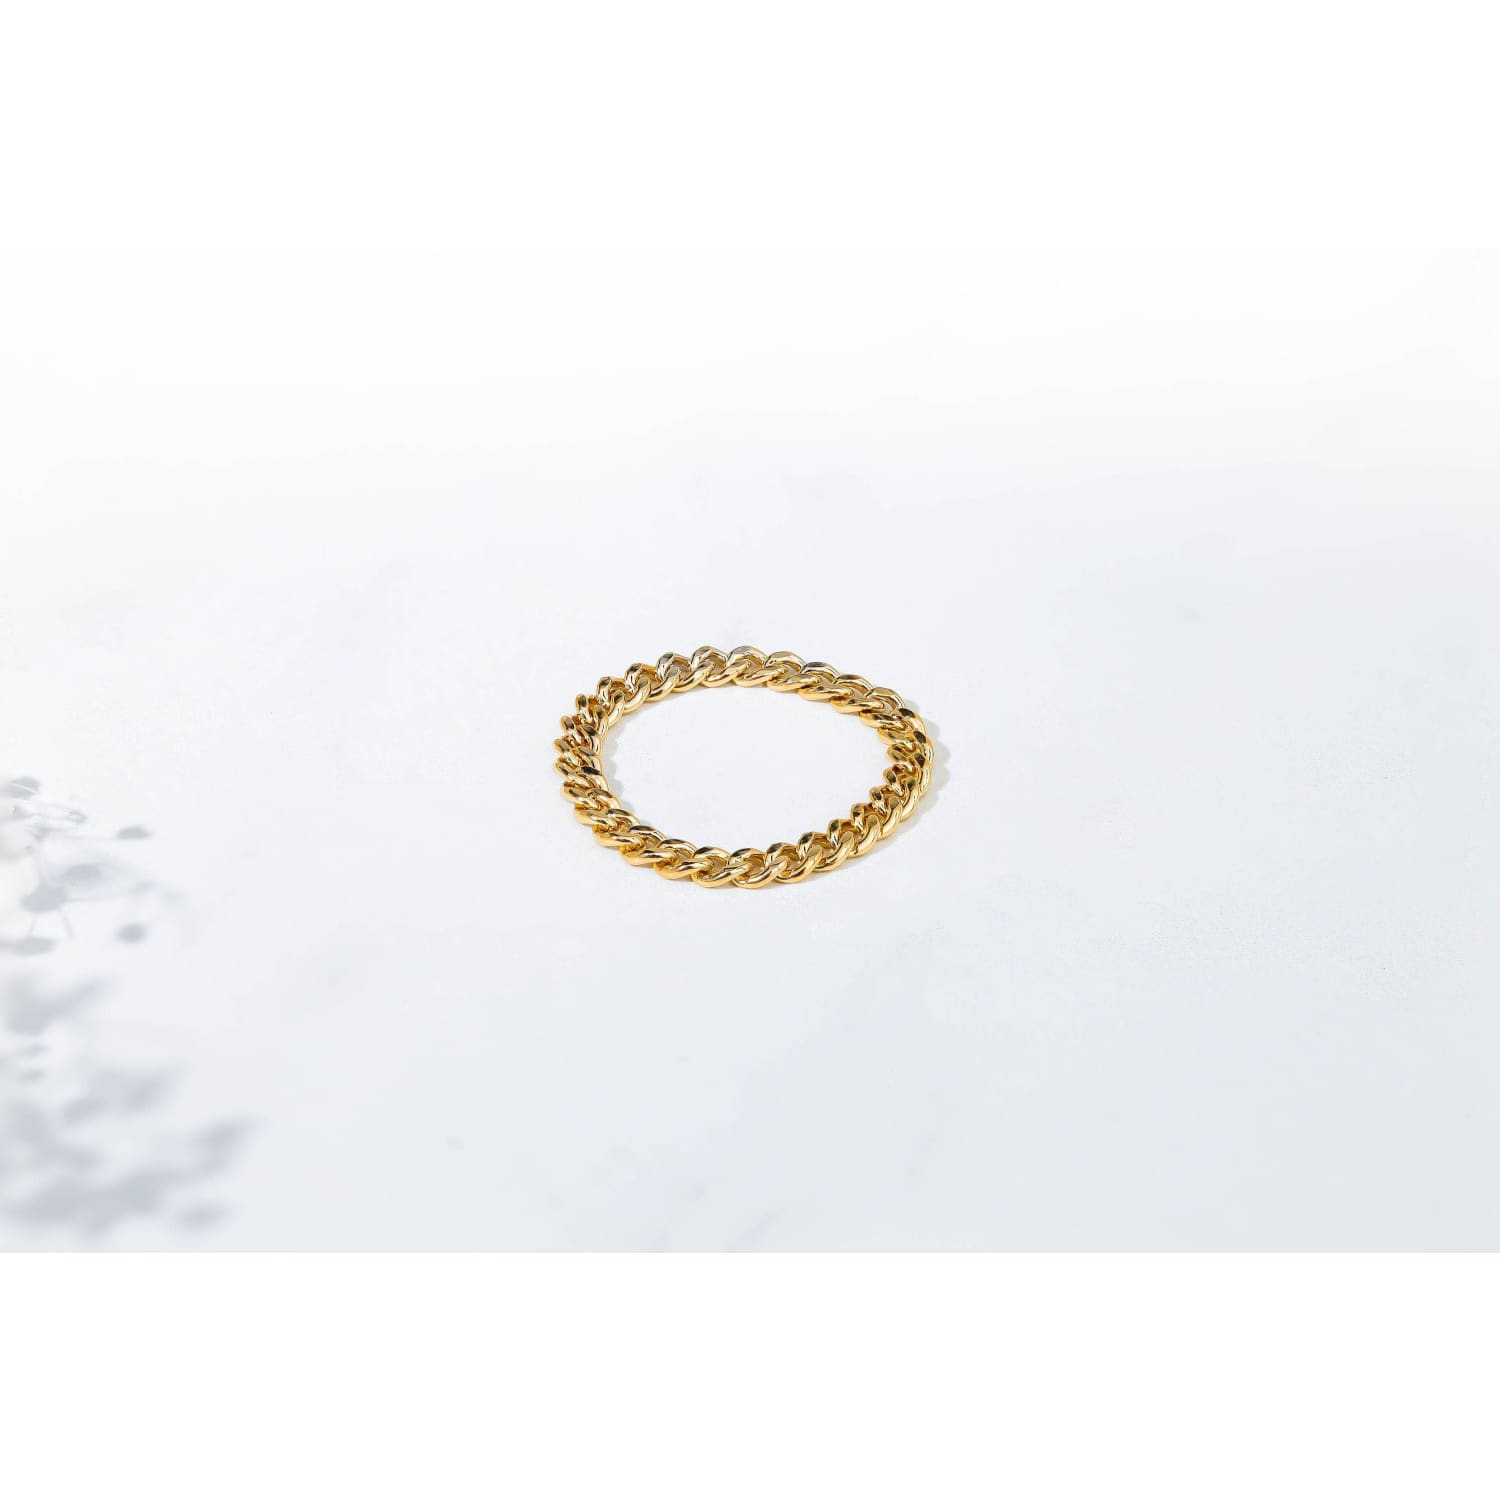 Cuban Link Chain Ring Raw Gemstone Jewelry Rough Crystal